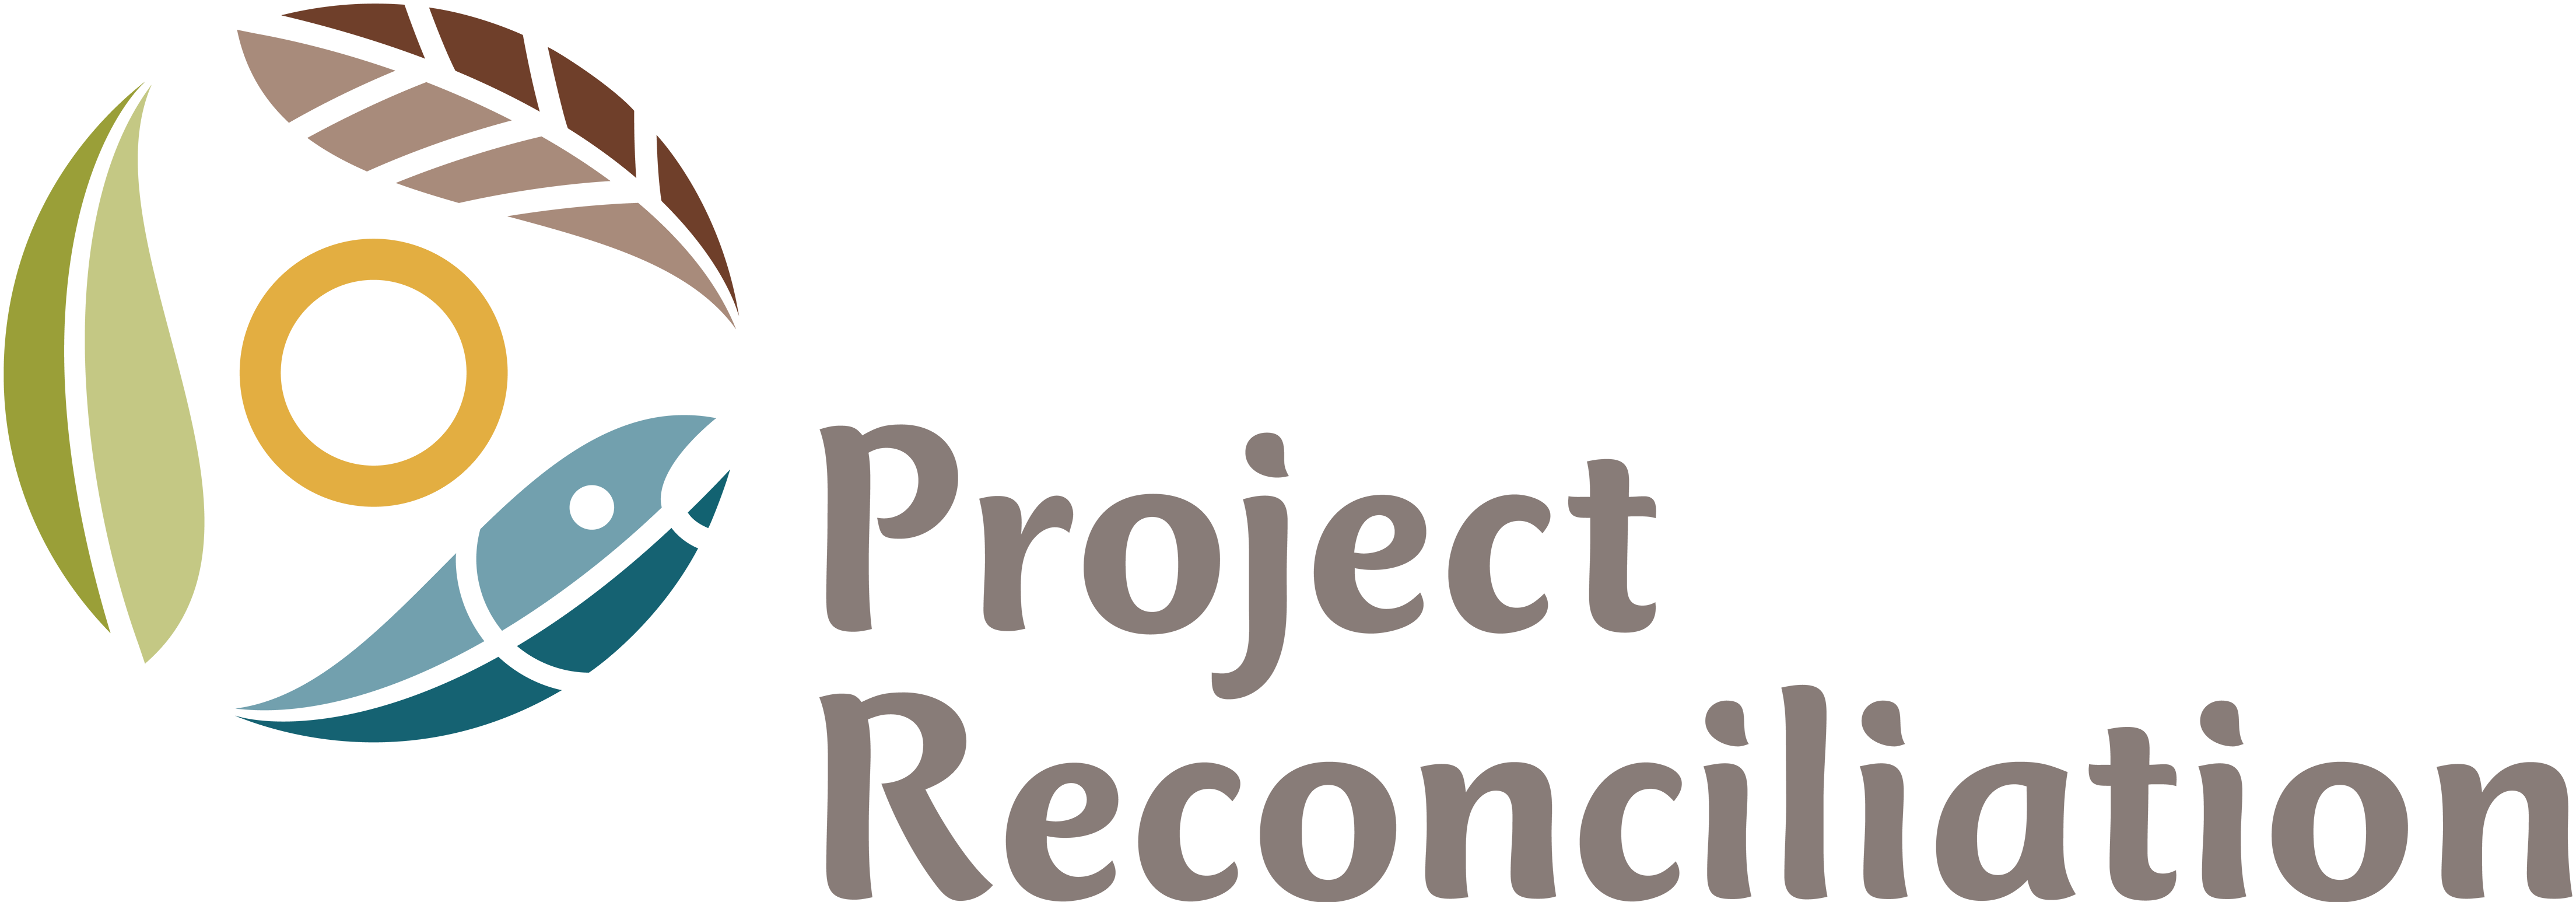 Project Reconciliation